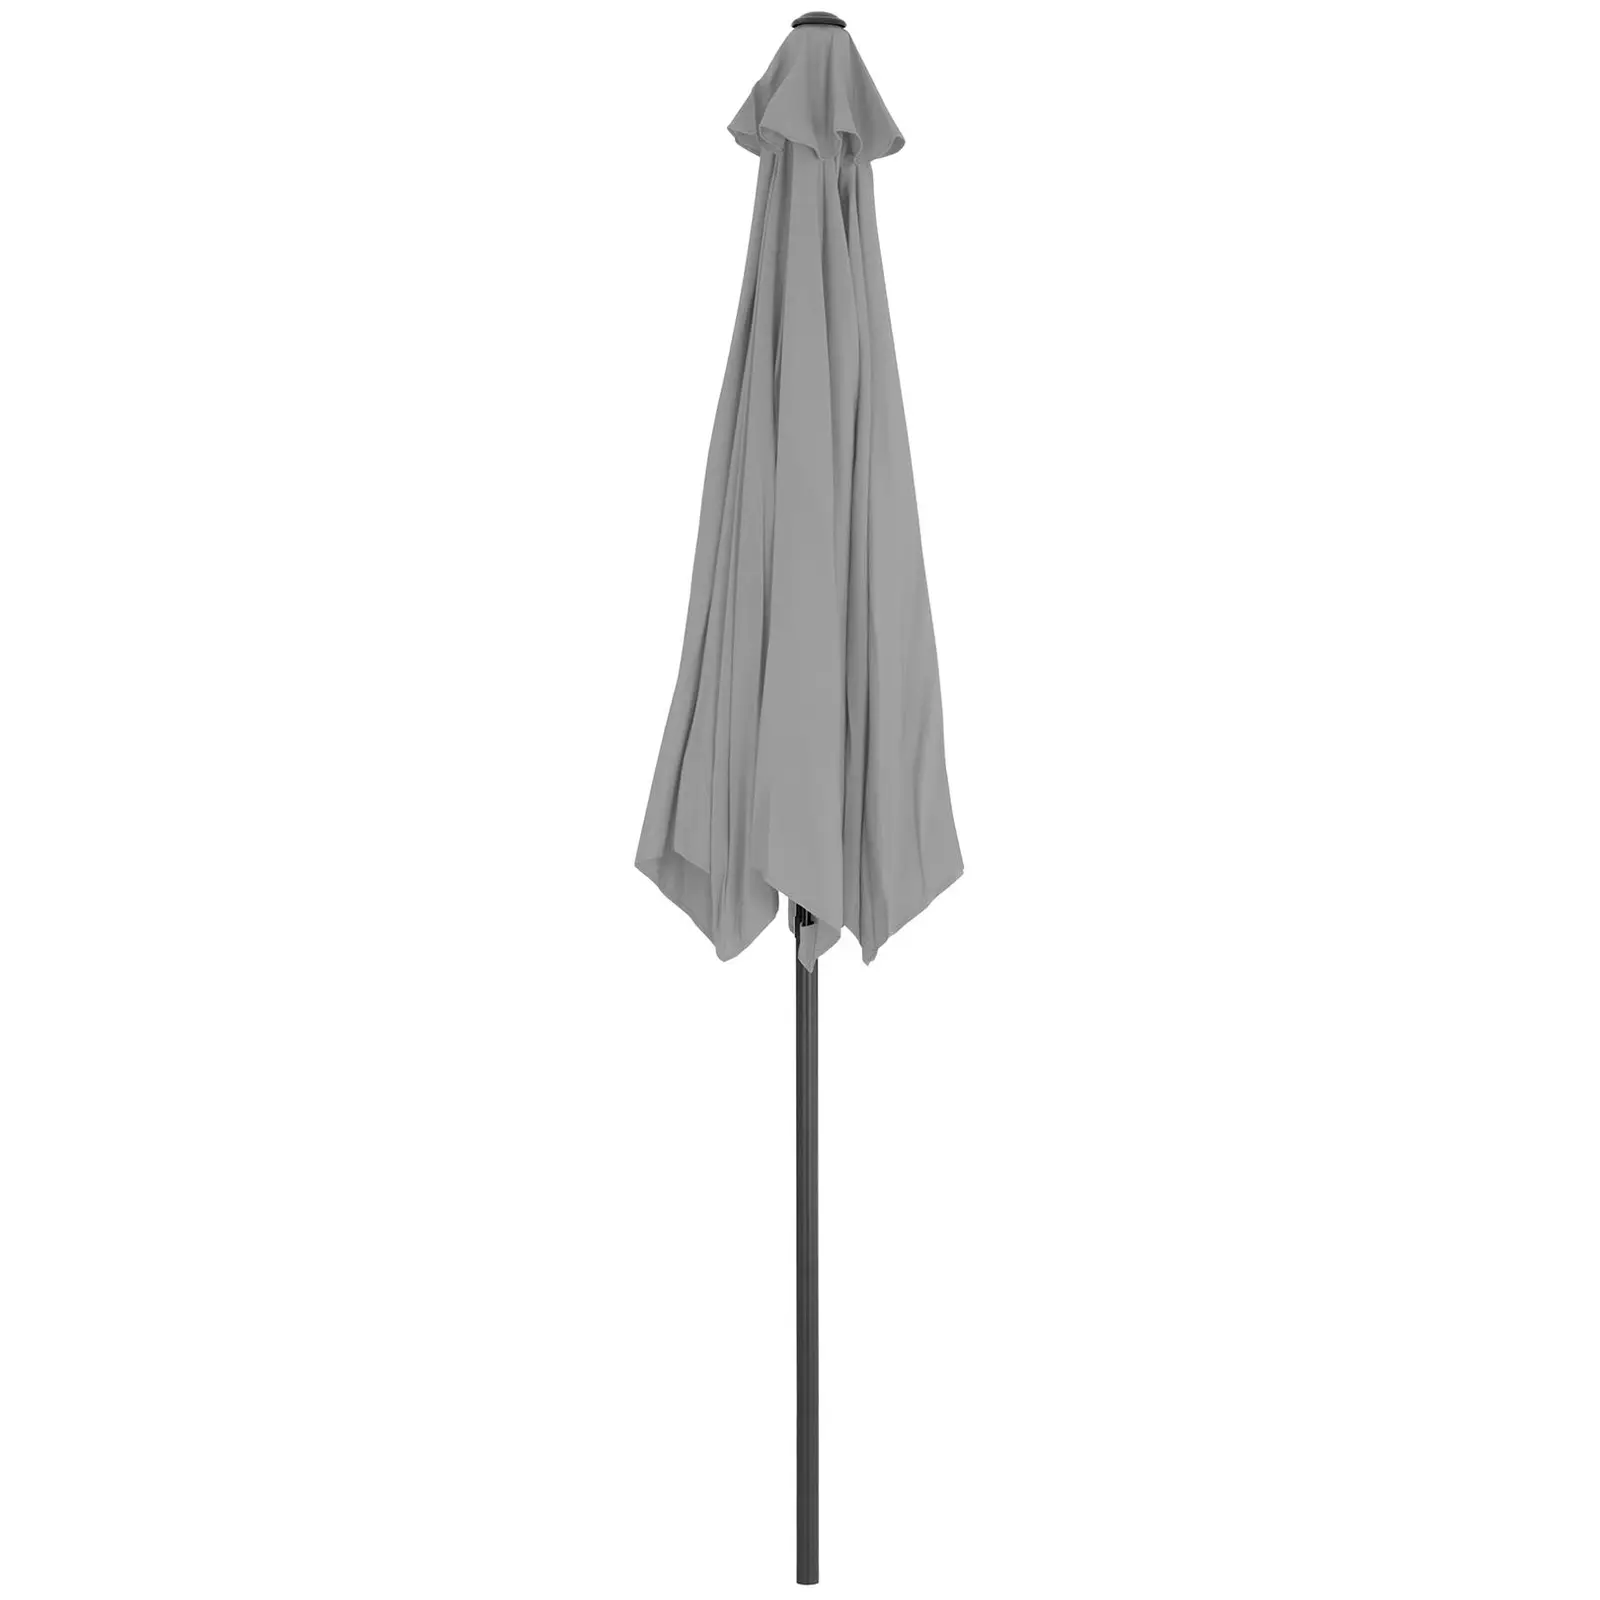 Parasoll  - mørkegrå - sekskantet - Ø 300 cm - vippbar